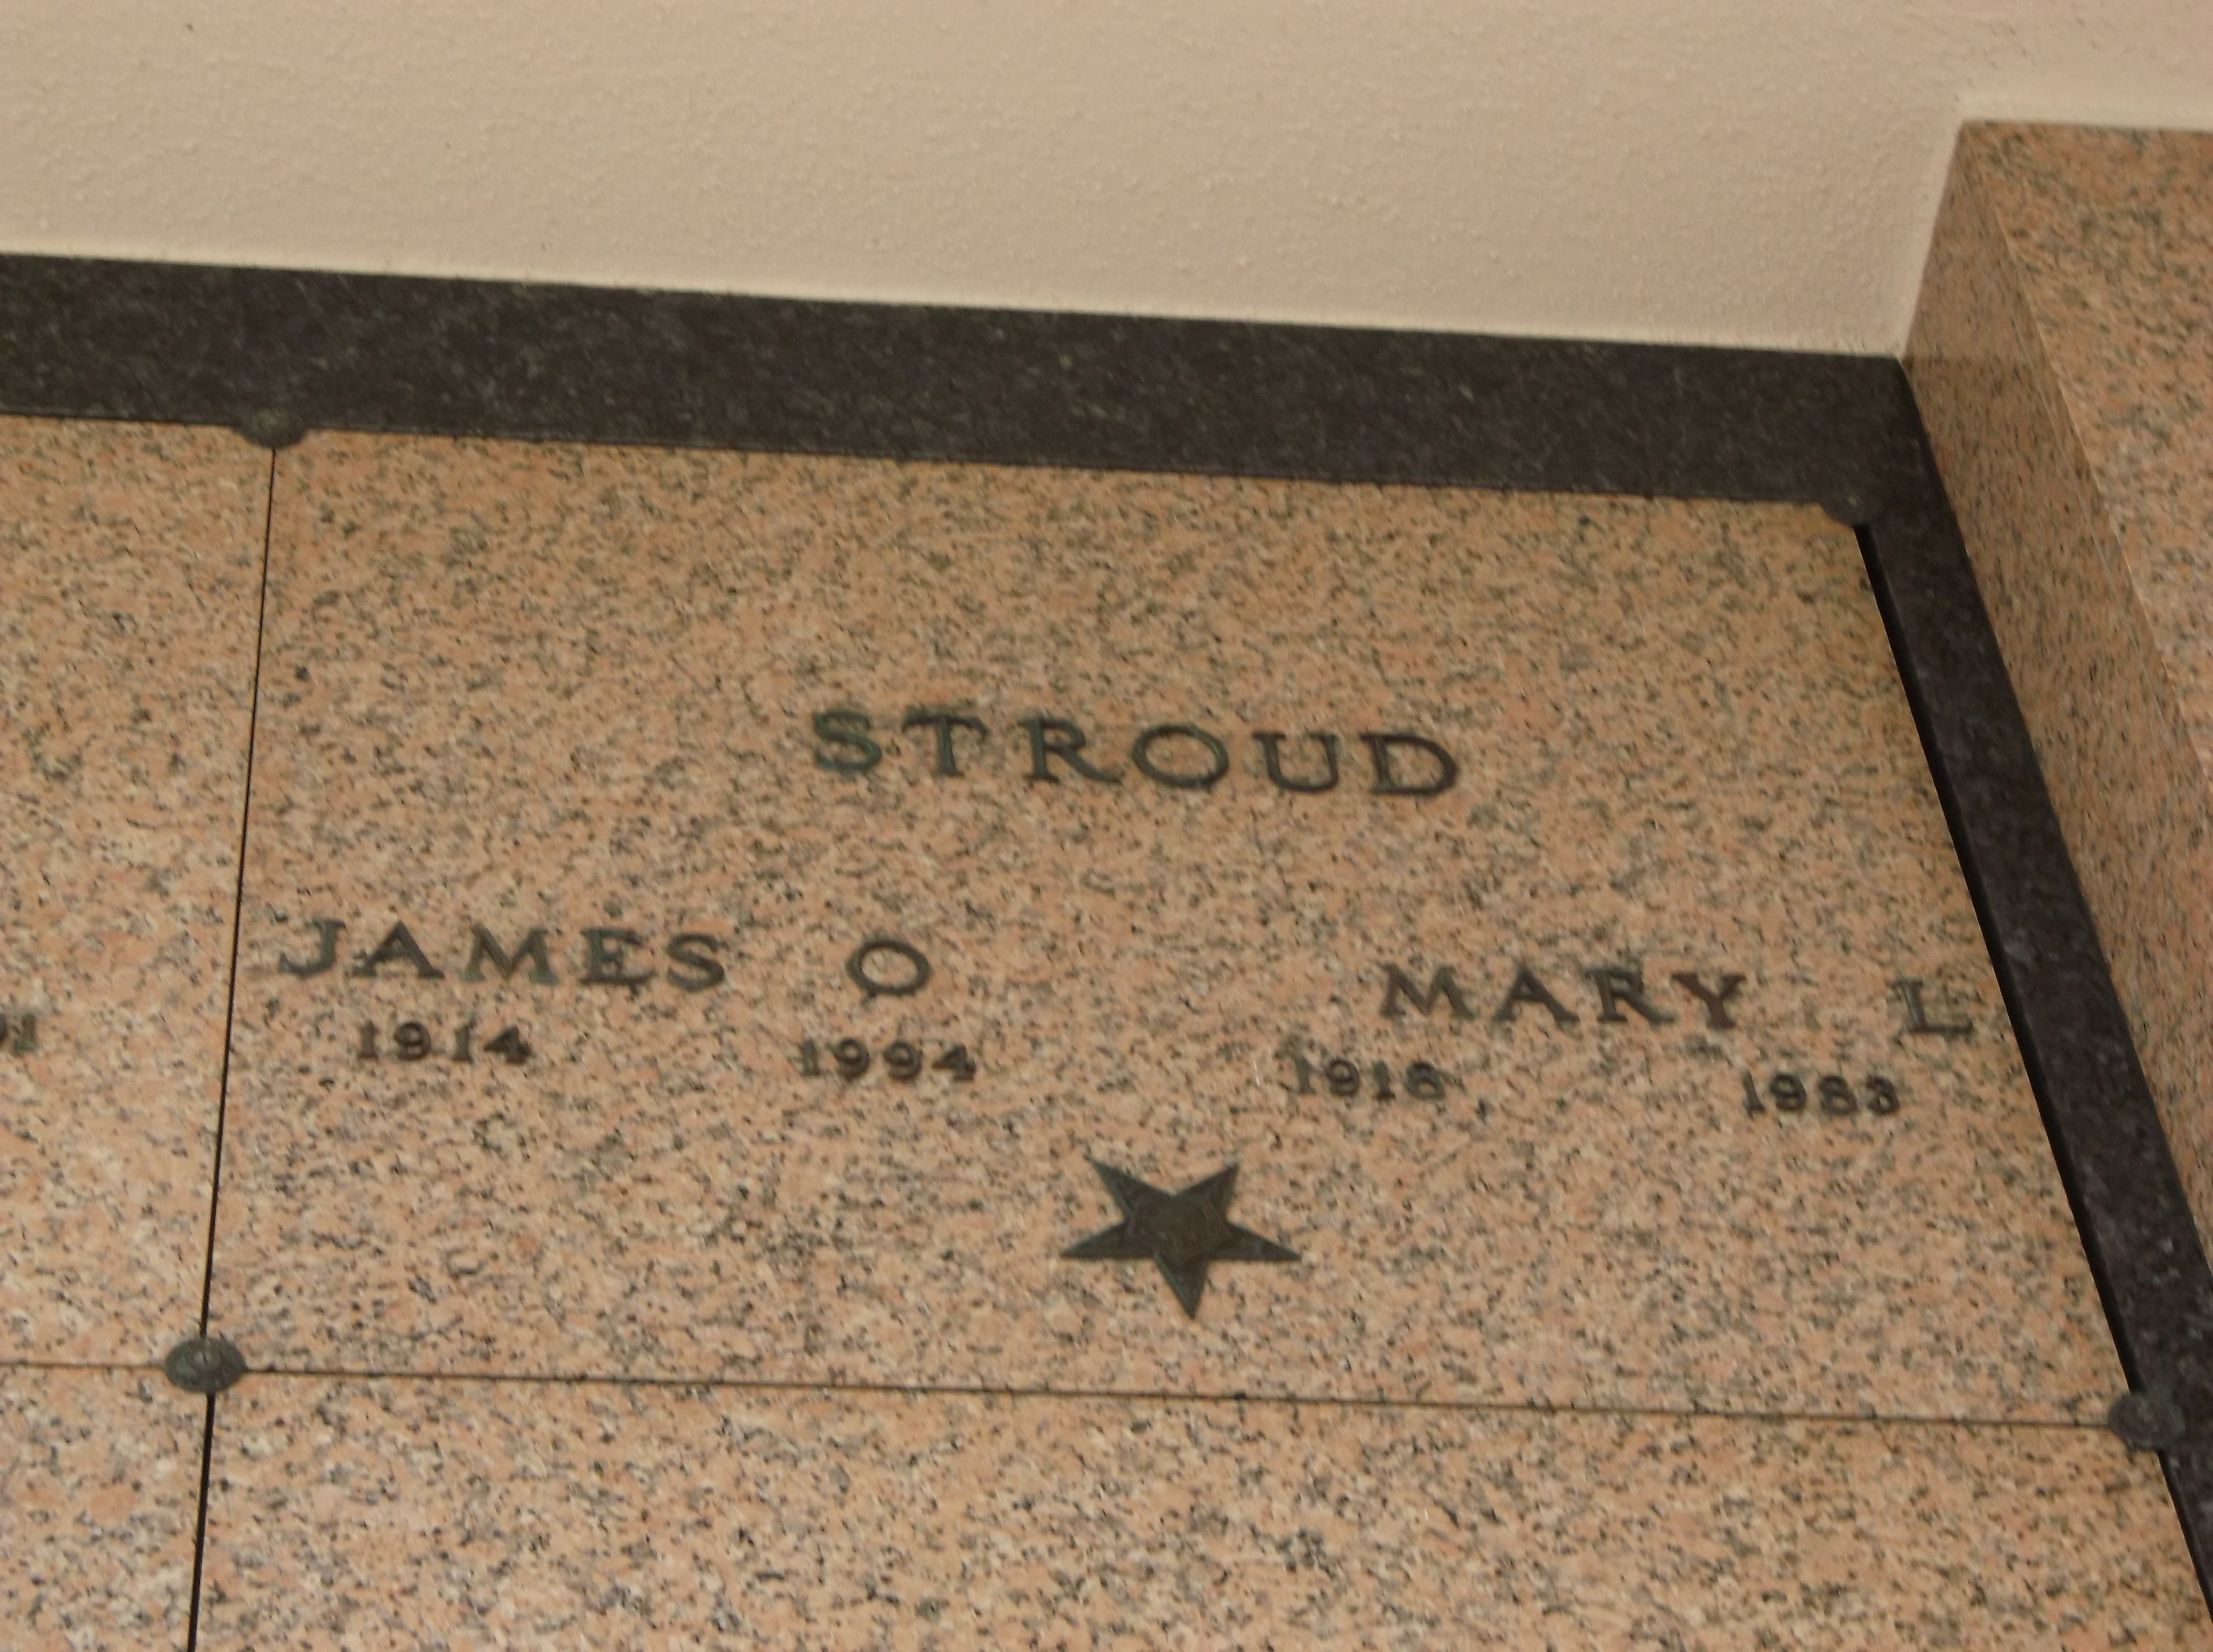 James O Stroud